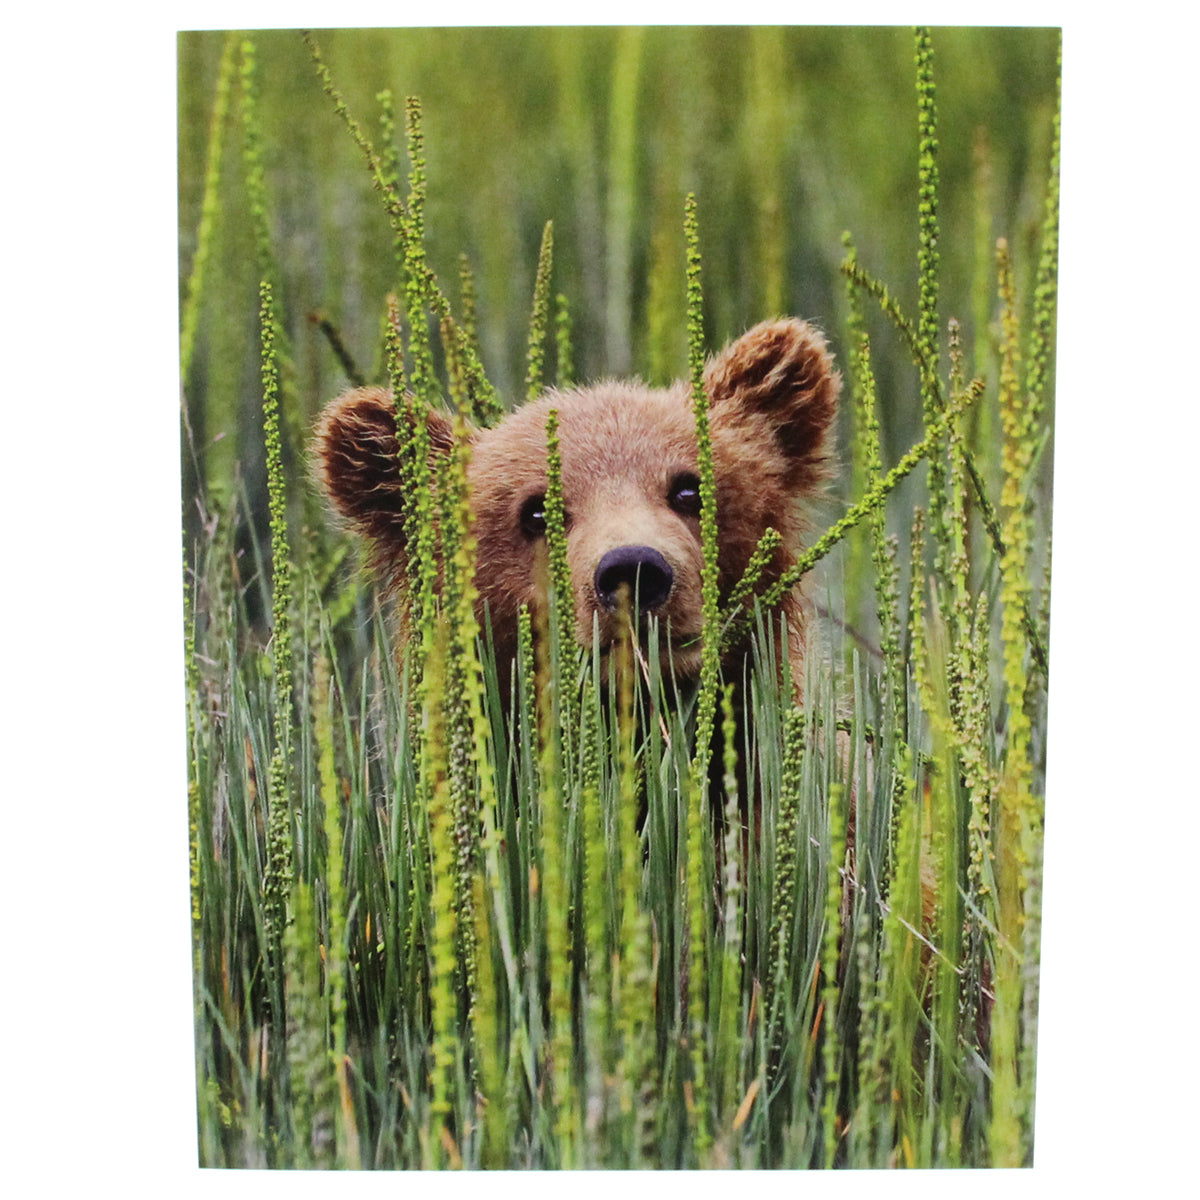 Friendship Card: (image of a bear)